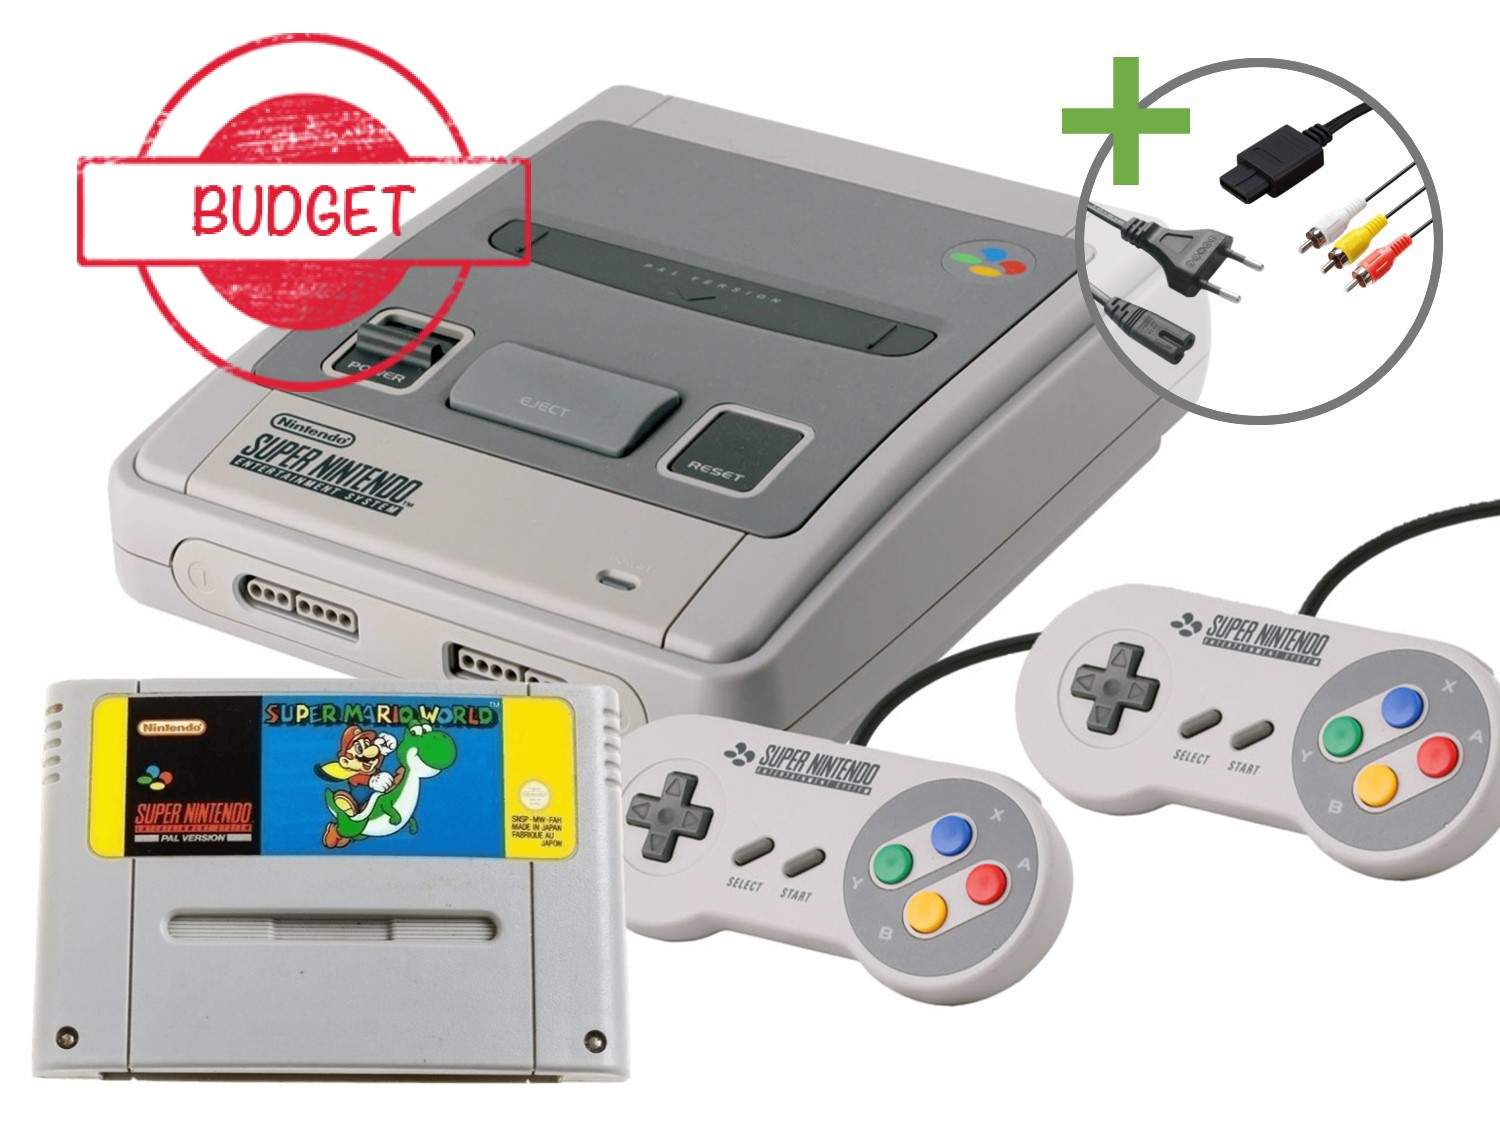 Super Nintendo Starter Pack - Super Mario World Edition - Budget Kopen | Super Nintendo Hardware